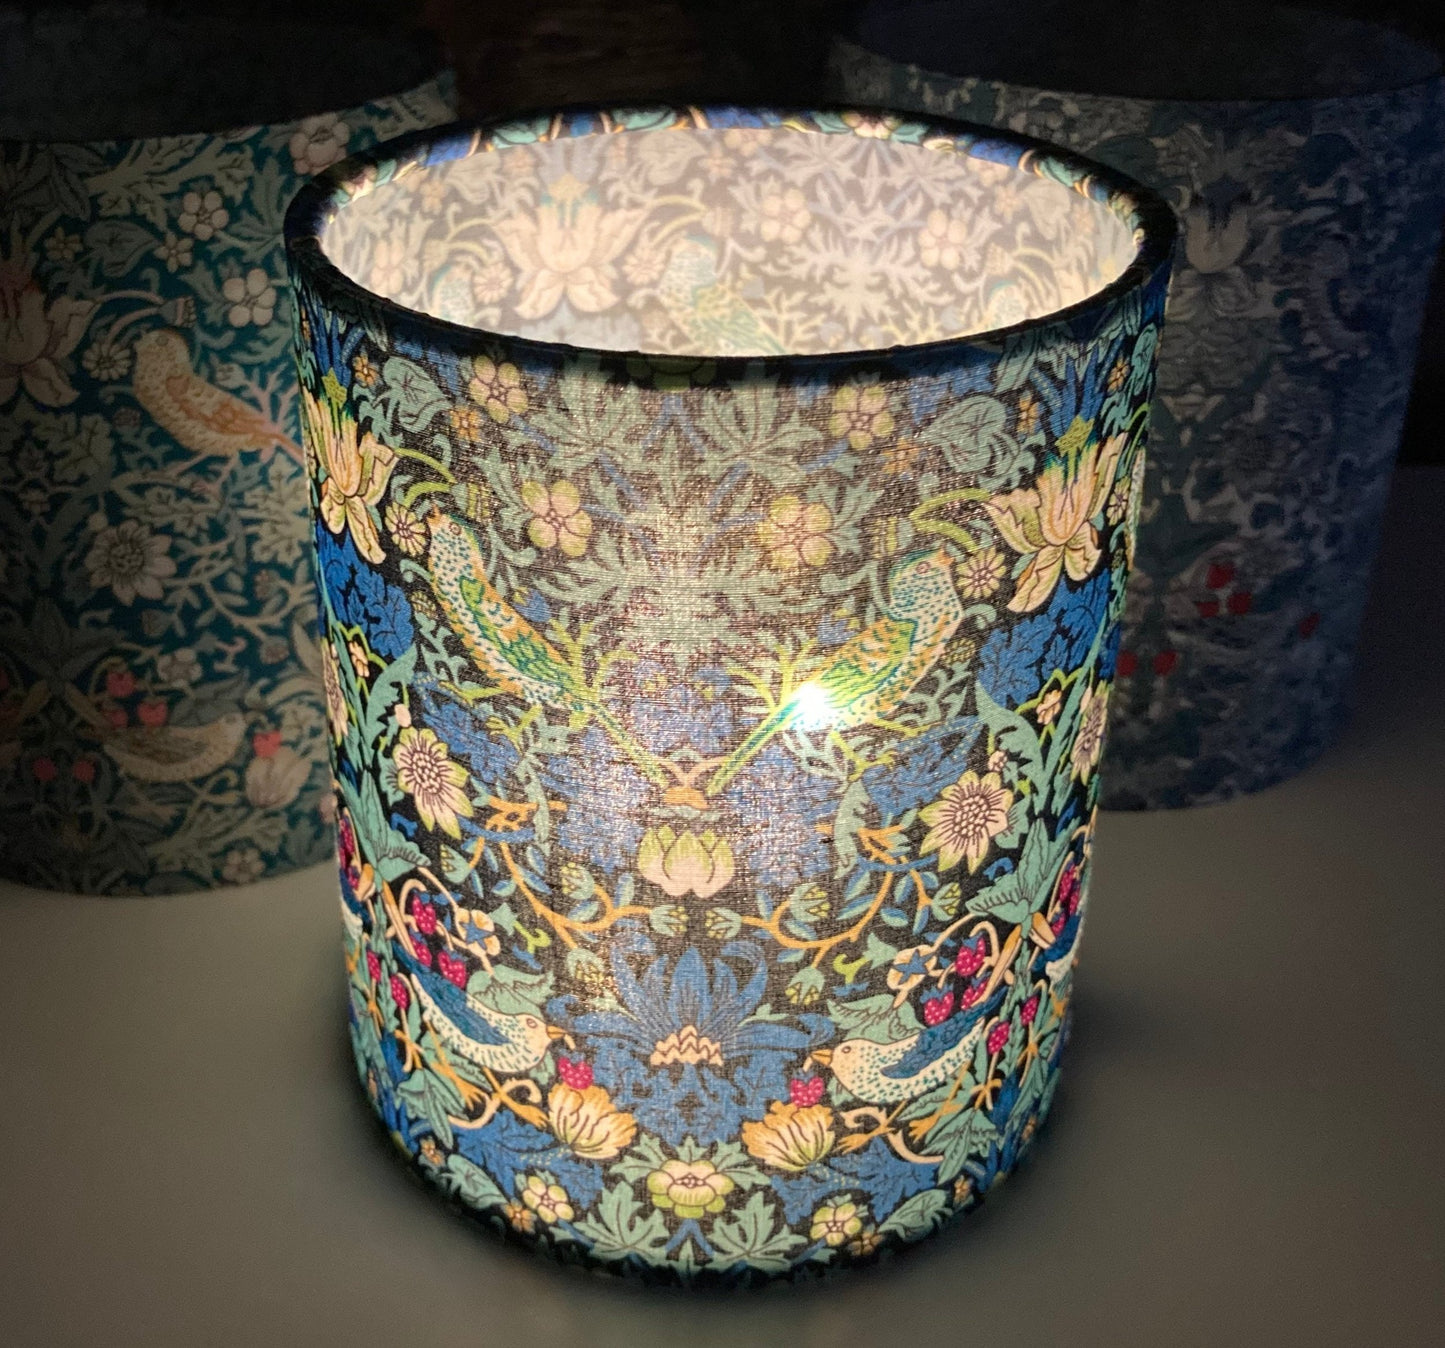 Handmade William Morris Cobalt Blue Strawberry Thief Fabric Lantern with Fairy Lights